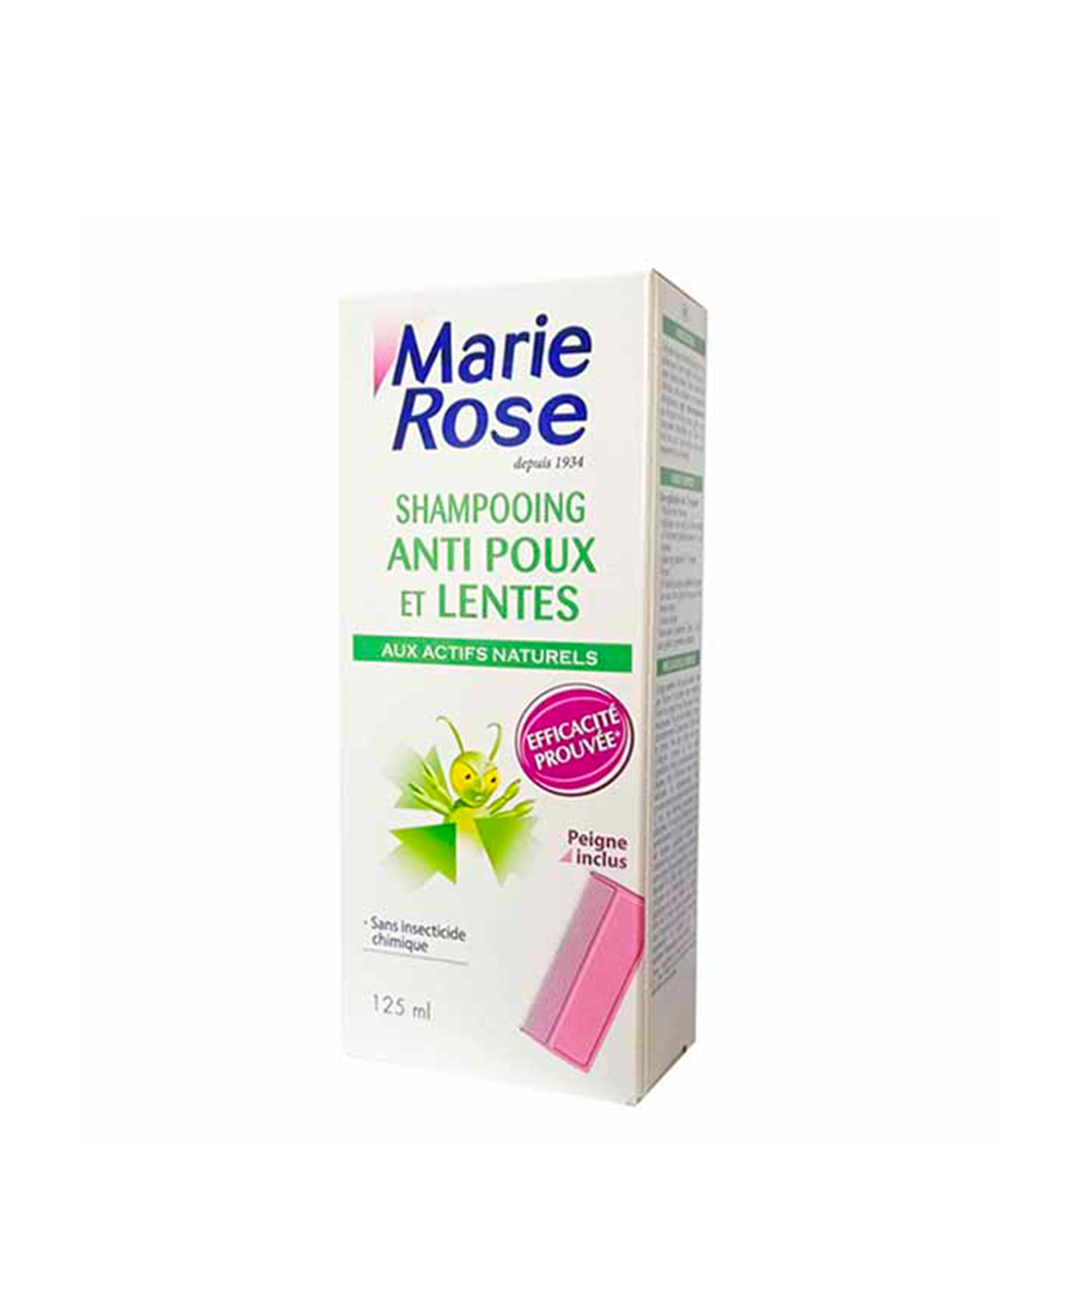 MARIE ROSE Shampooing Anti Poux et Lentes 125ML - Citymall